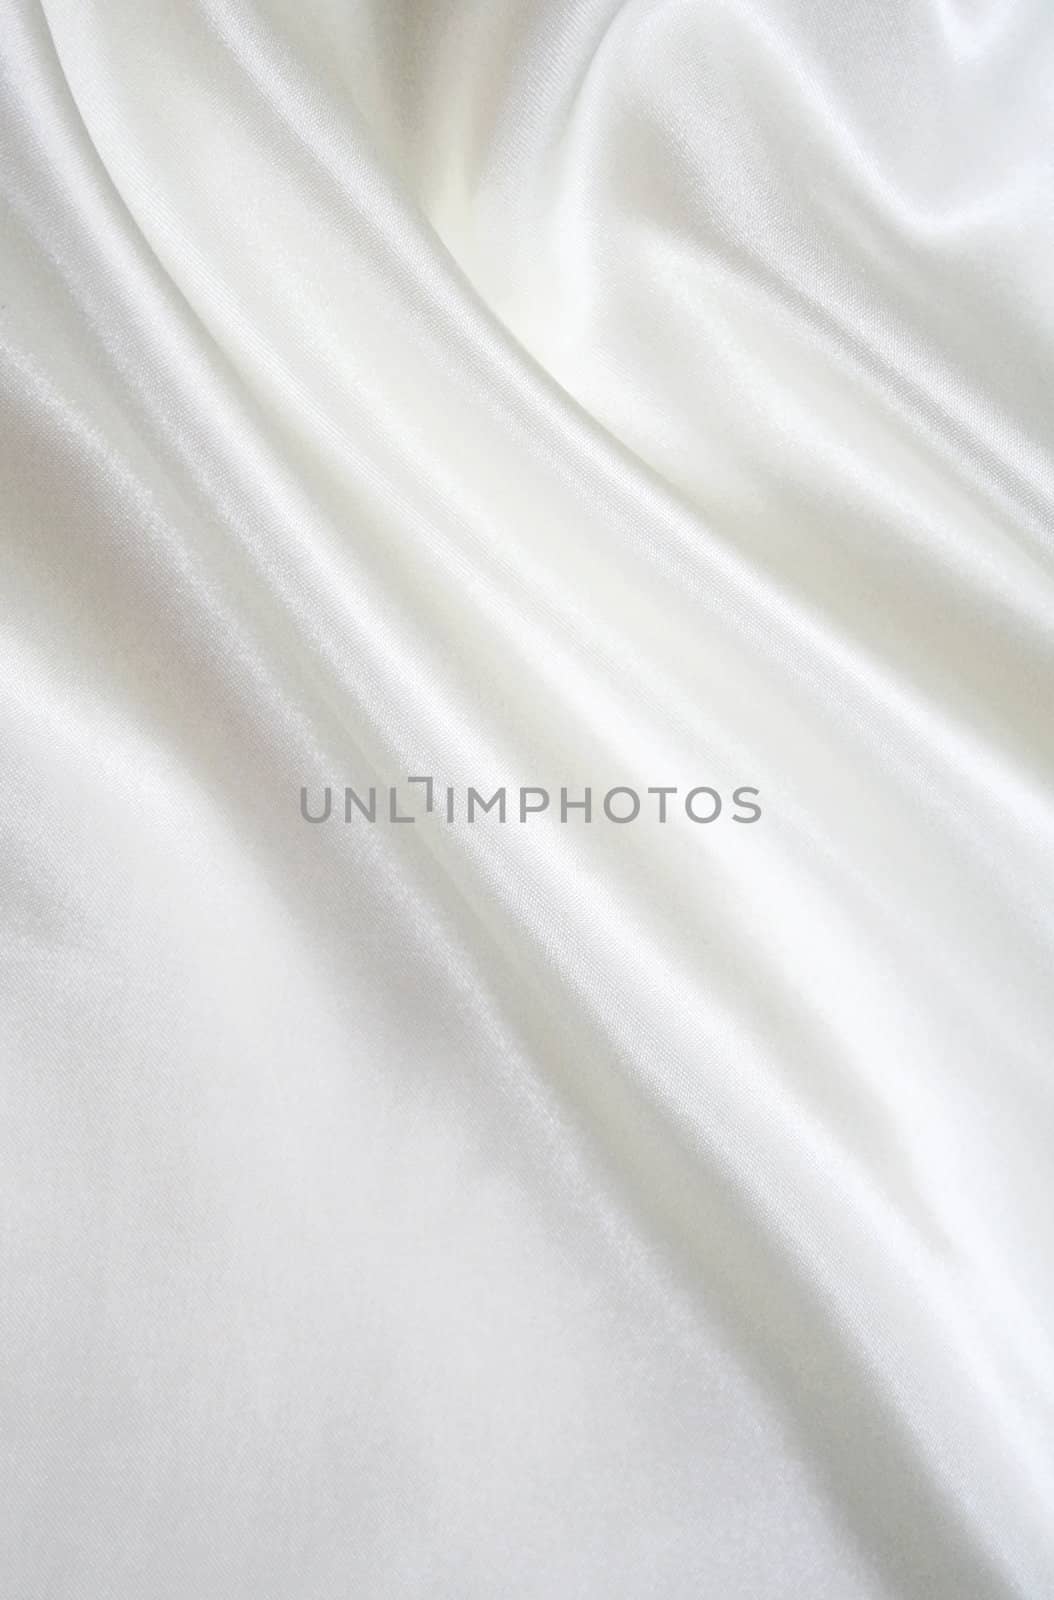 Smooth elegant white silk as background by oxanatravel